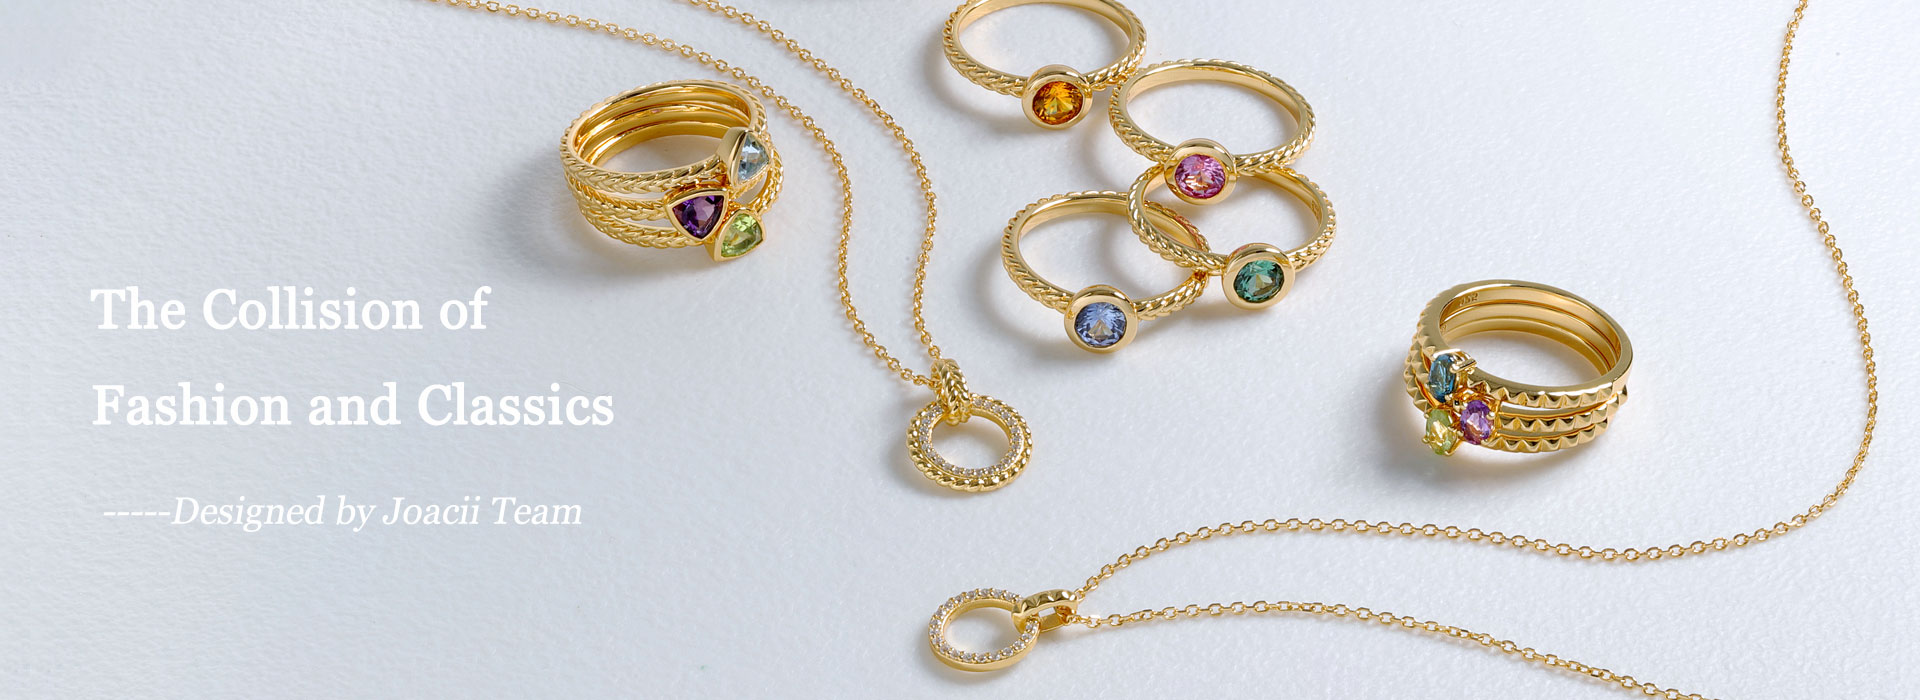 guangzhou jewelry manufacturers, odm jewelry manufacturers, gold vermeil jewelry manufacturer